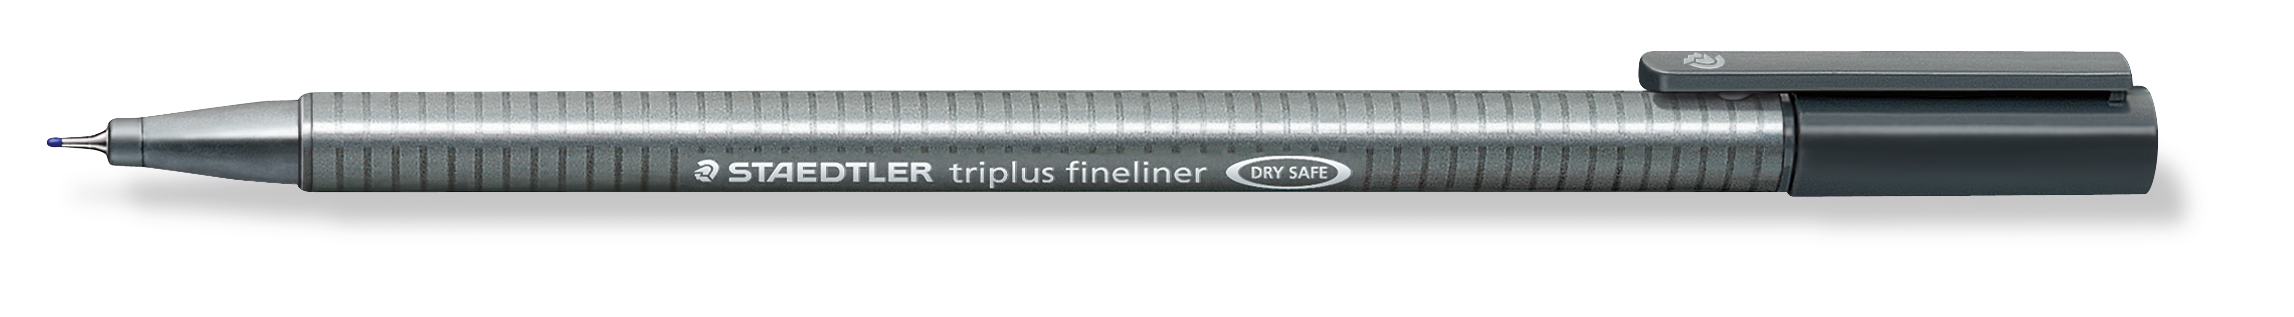 STAEDTLER Triplus Fineliner 0,3mm 334-8 gris gris